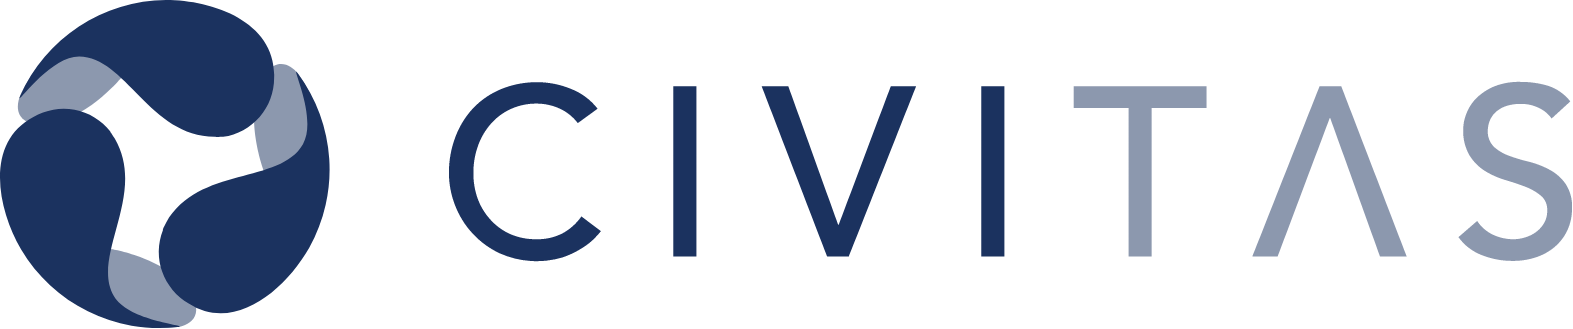 Civitas Resources logo large (transparent PNG)